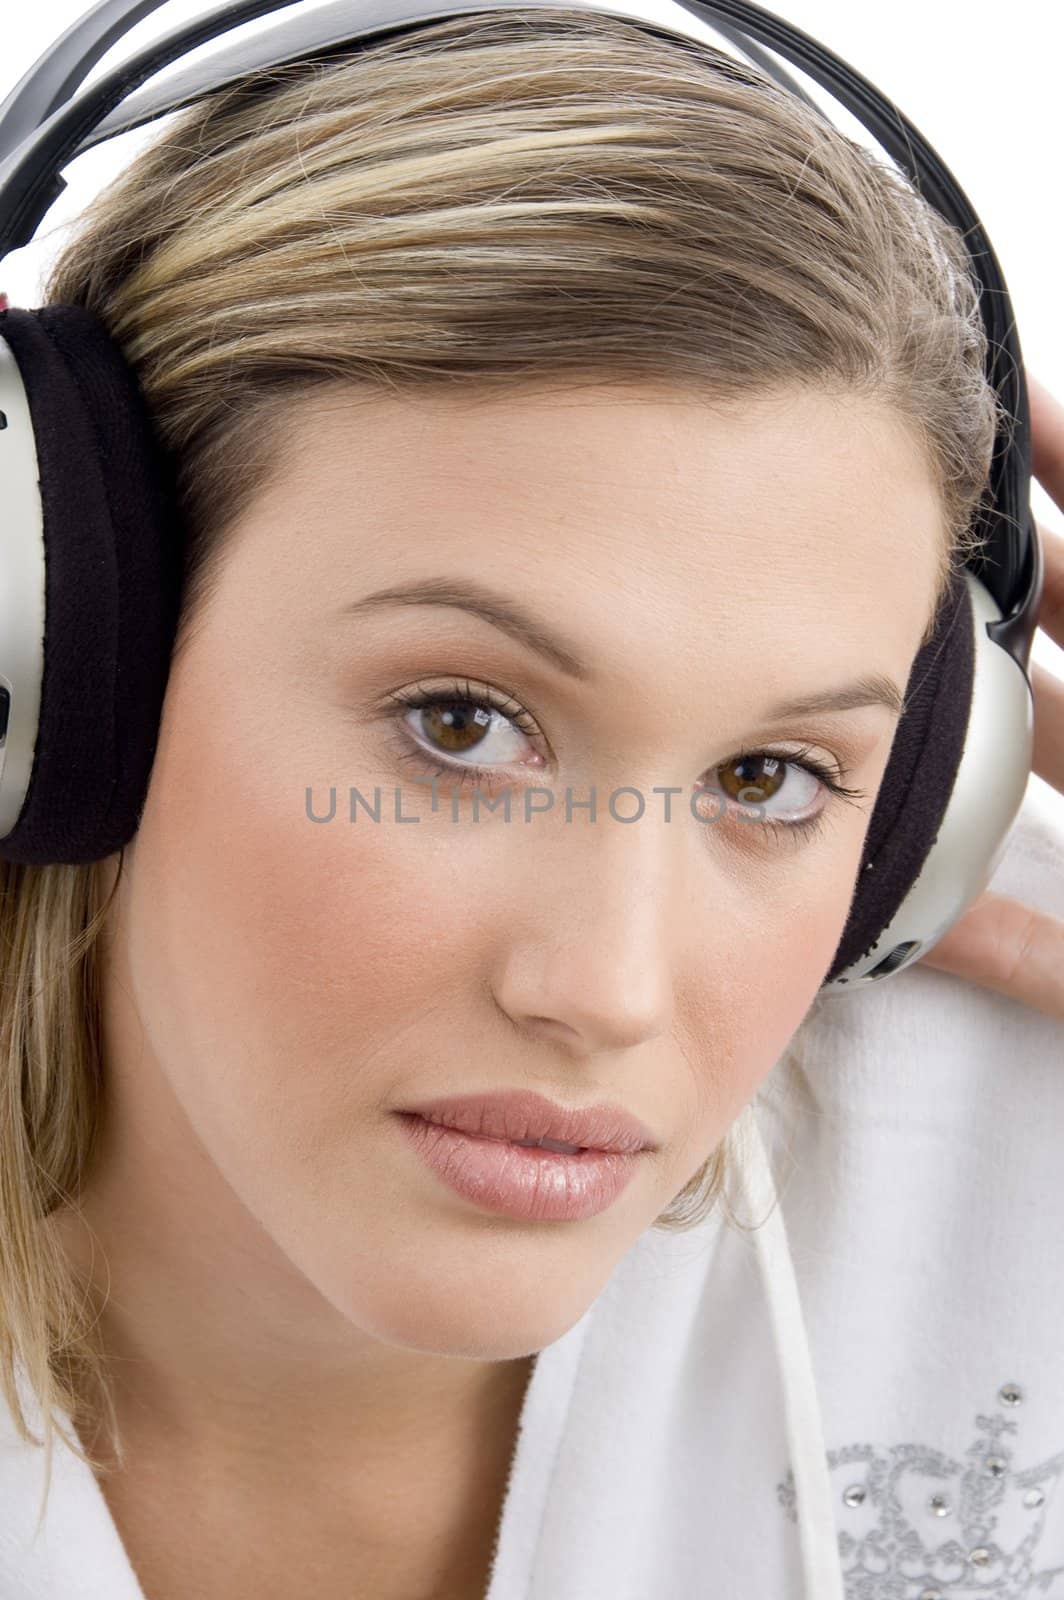 woman wearing headset by imagerymajestic